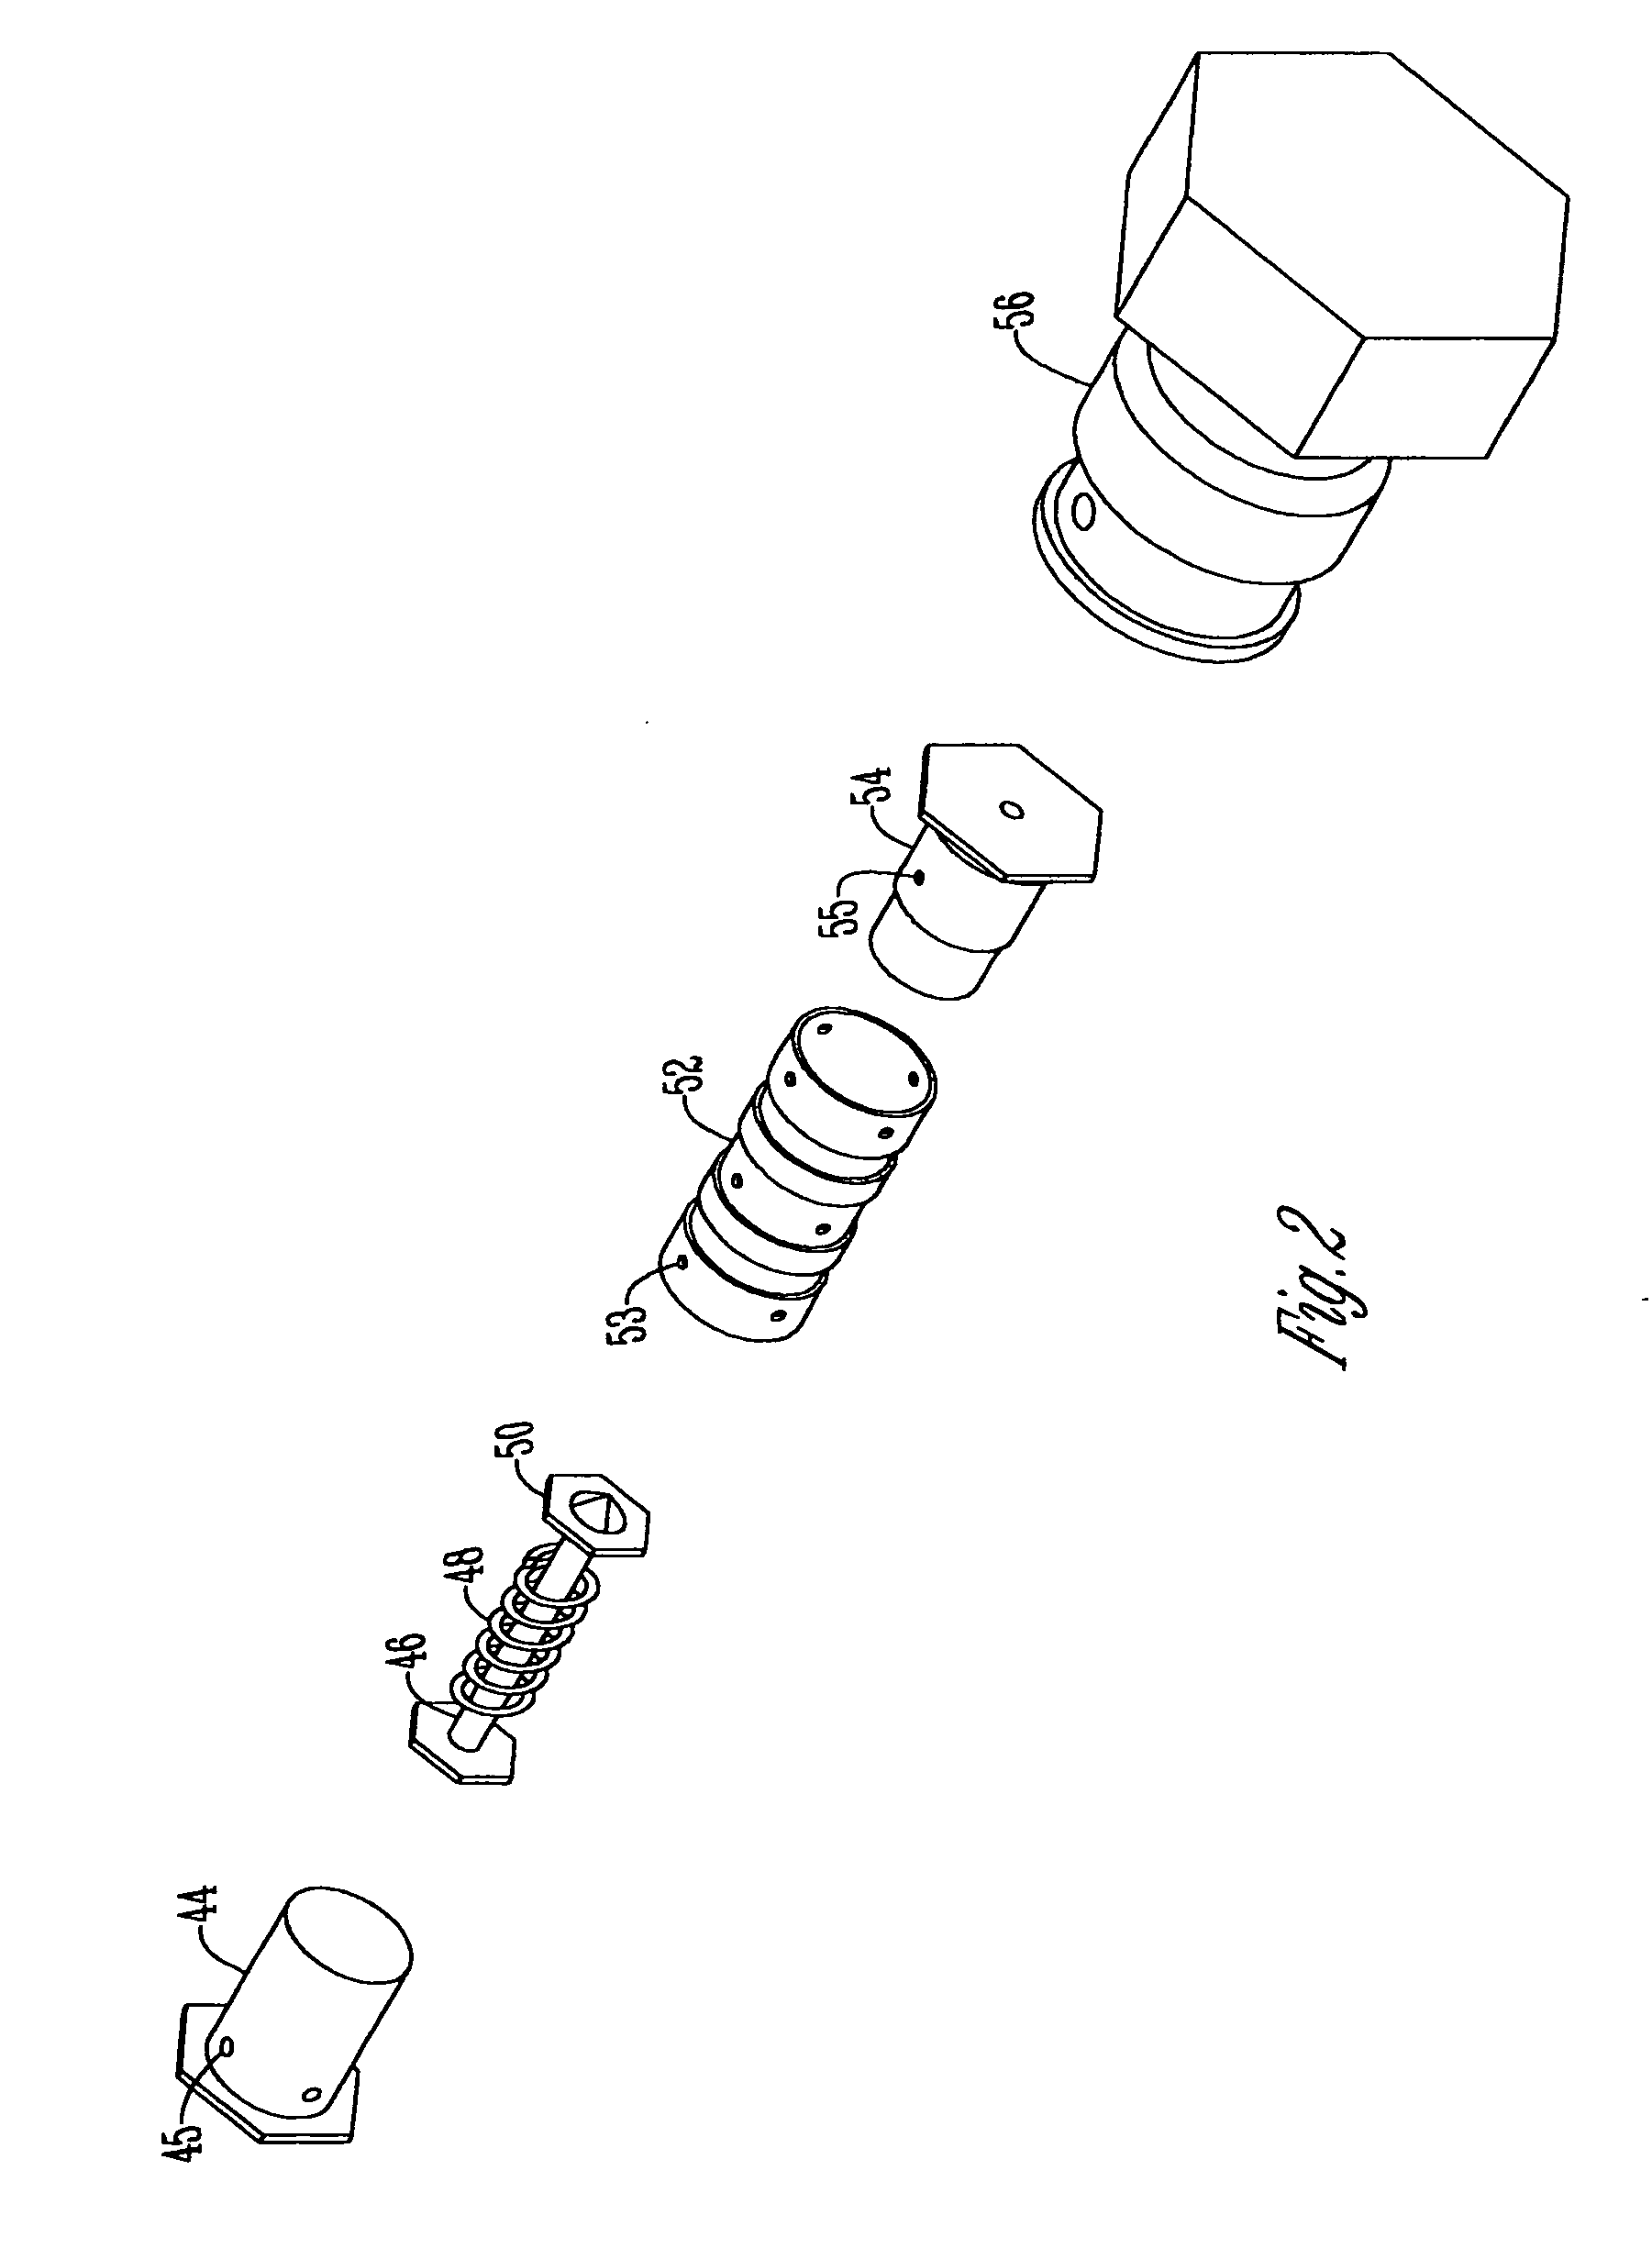 Dual check-relief valve